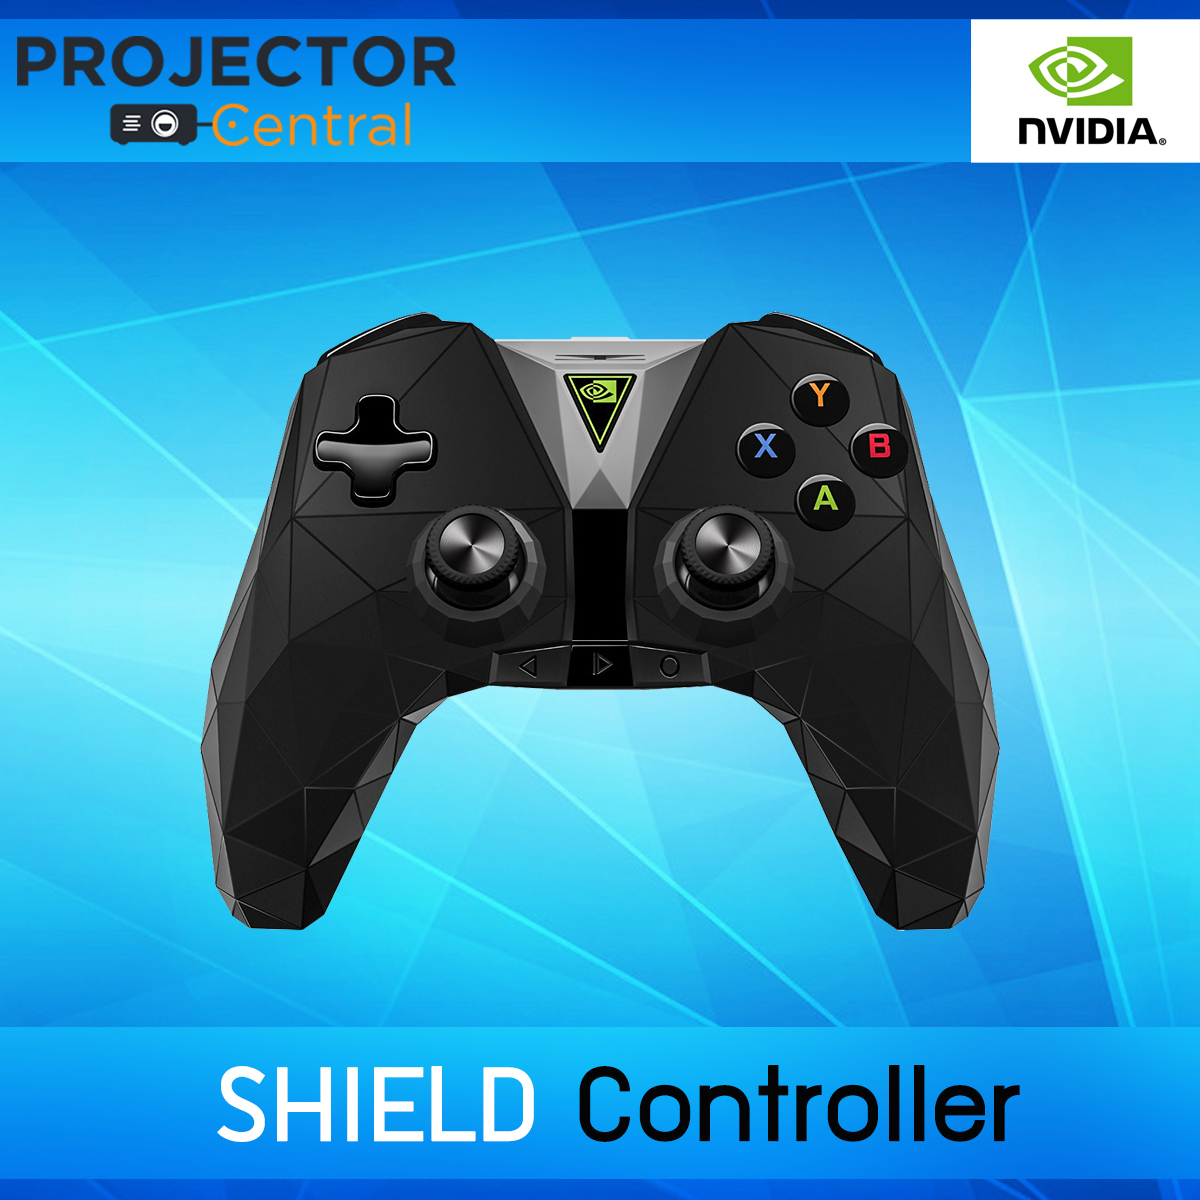 nvidia shield controller warranty